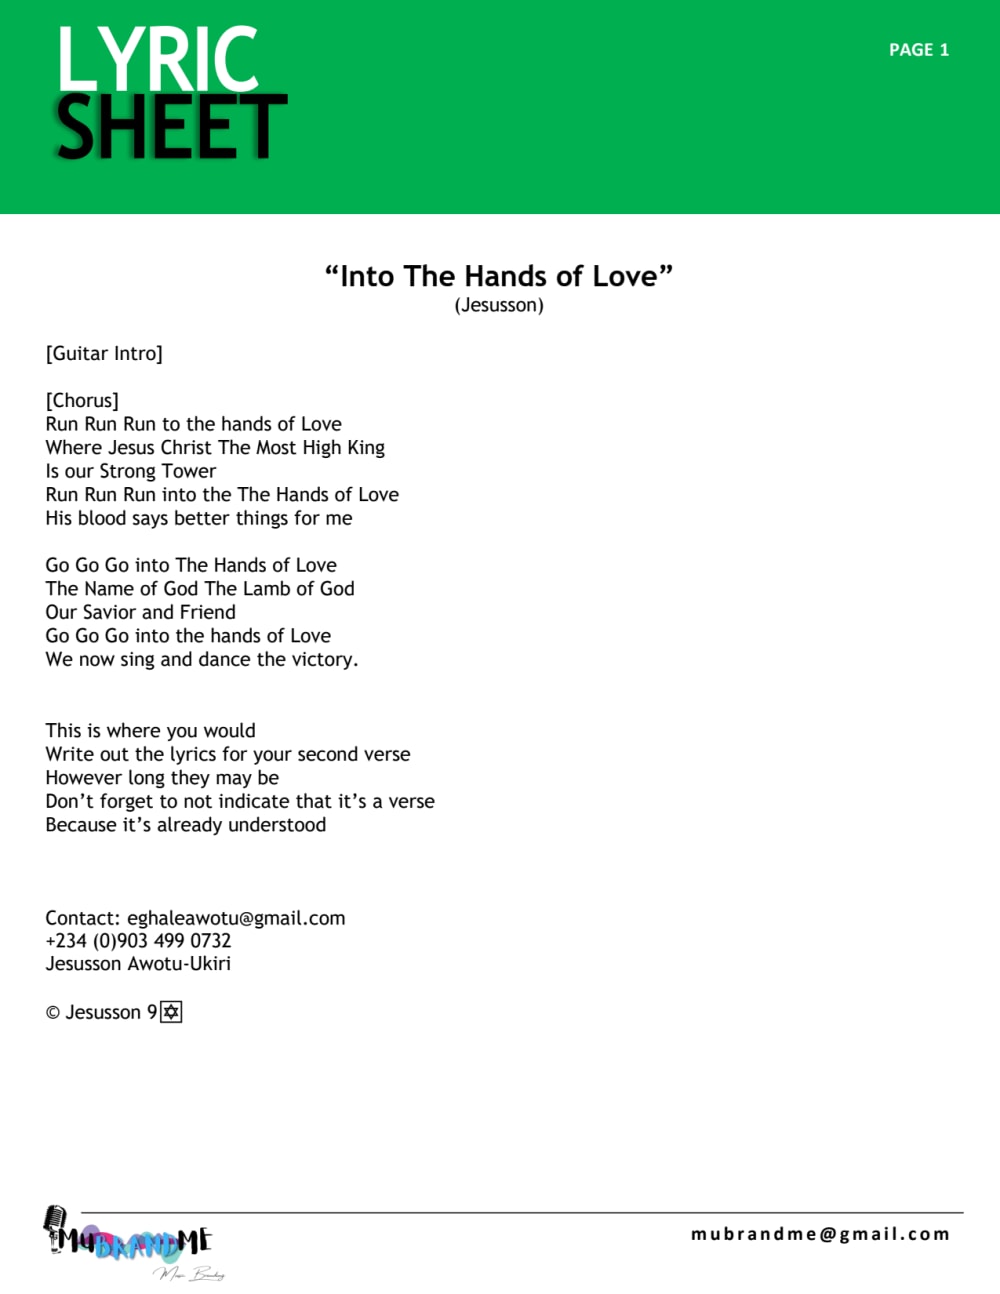 Lirik Lagu Price Tag, PDF, Dance Pop